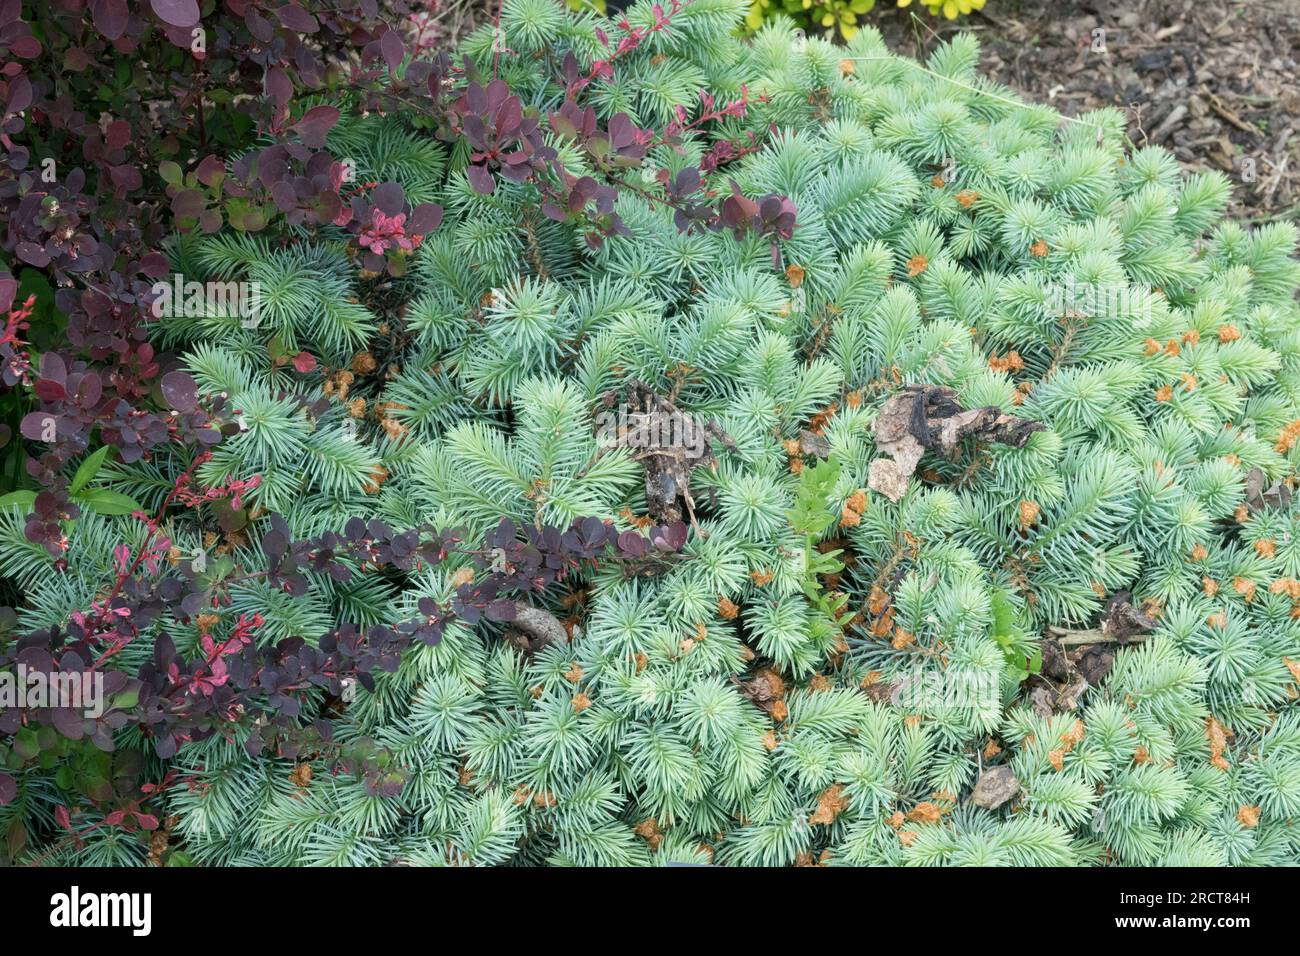 Colorado Blue Spruce, Picea pungens 'Kloster Maria Stern' garden cultivar Stock Photo